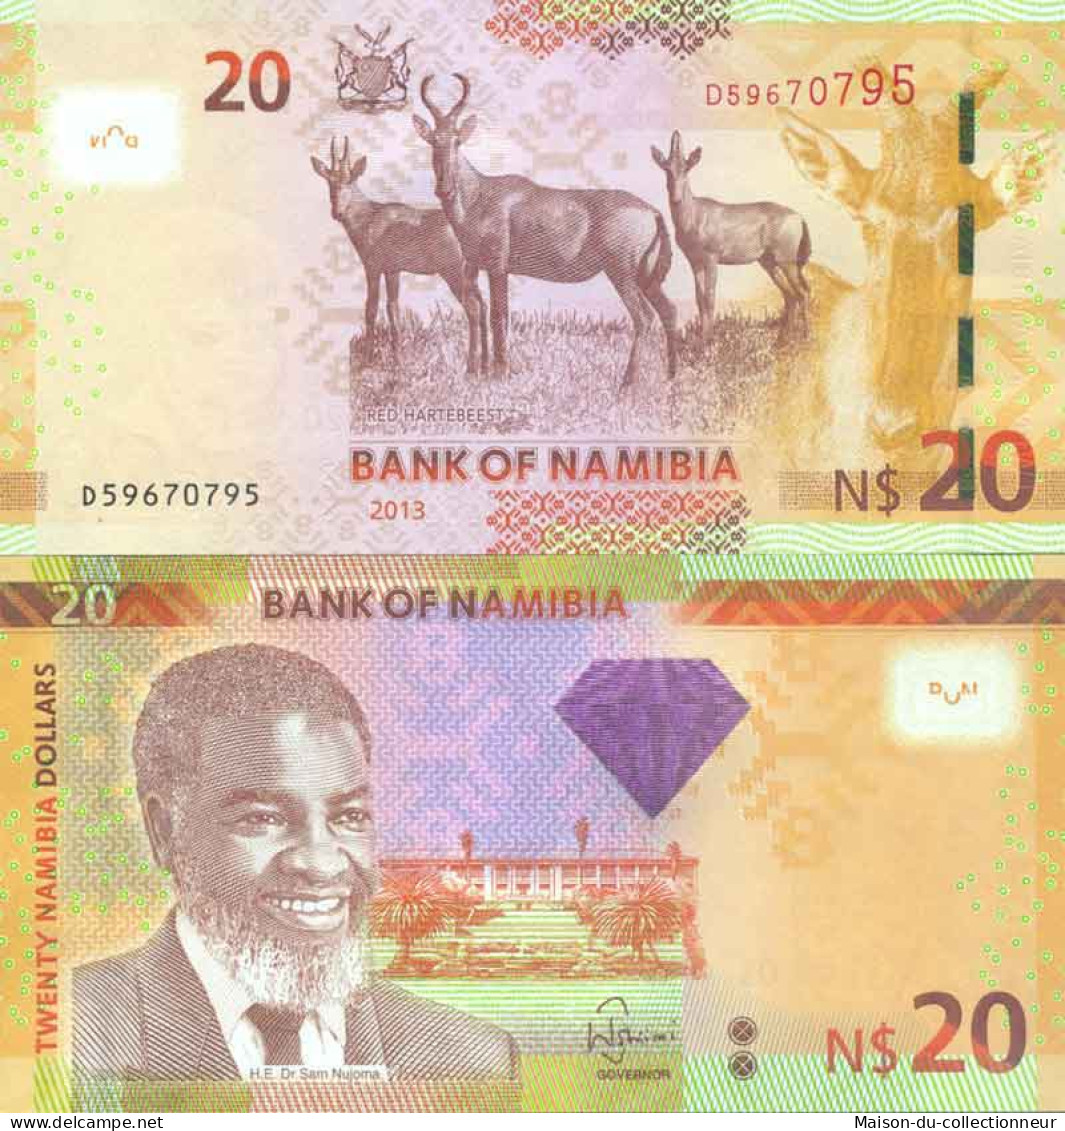 Billet De Banque Collection Namibie - PK 17 - 20 Dollars - Namibië